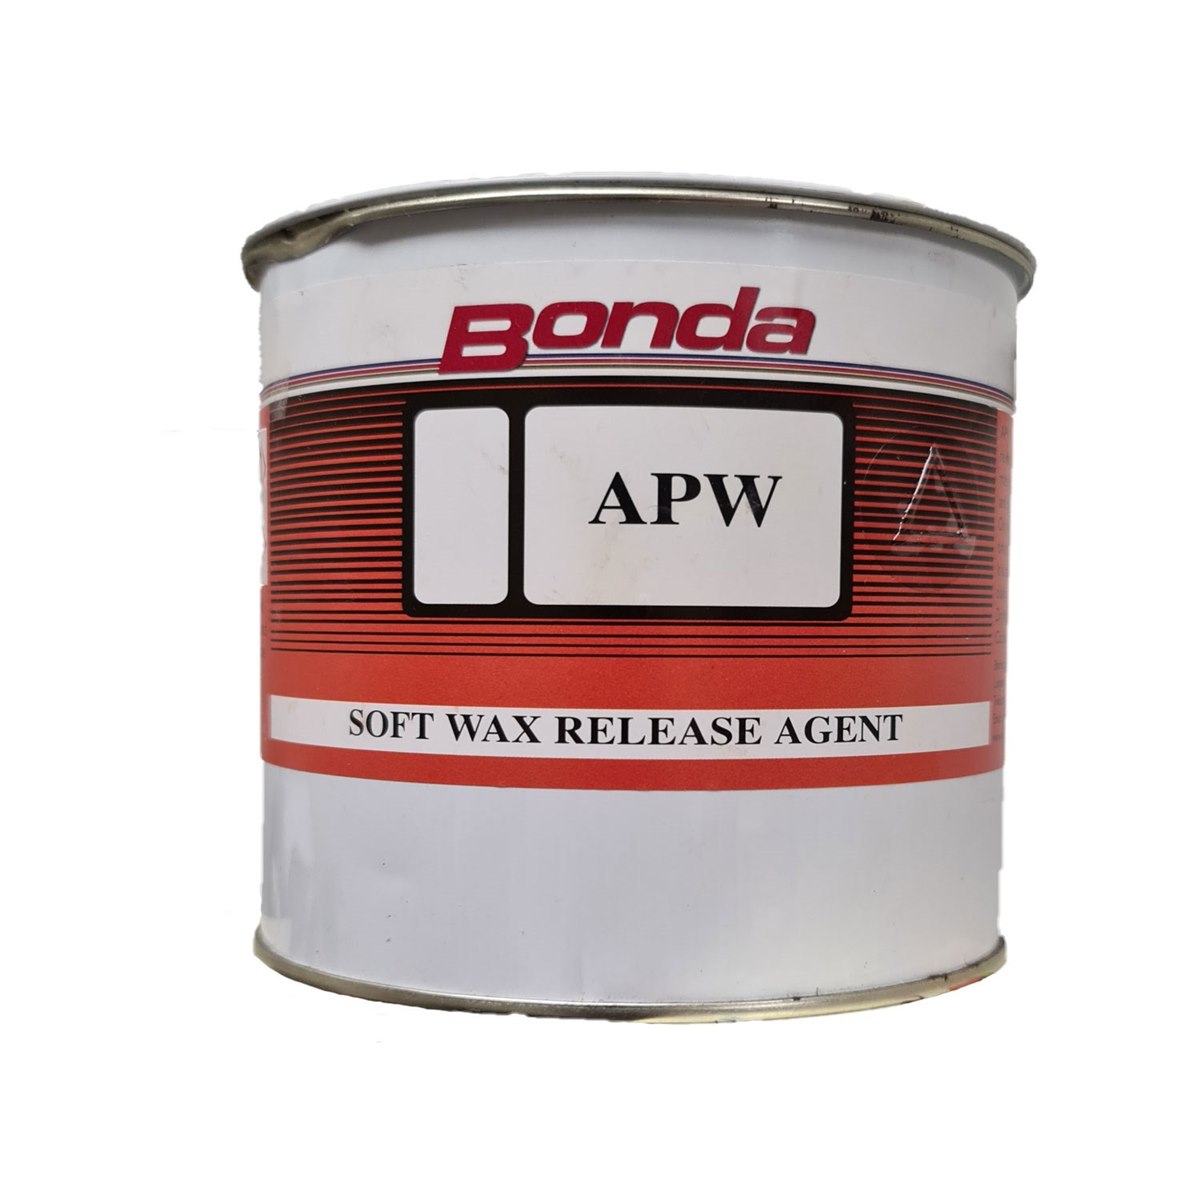 Bonda APW Soft Wax Release Agent 500g